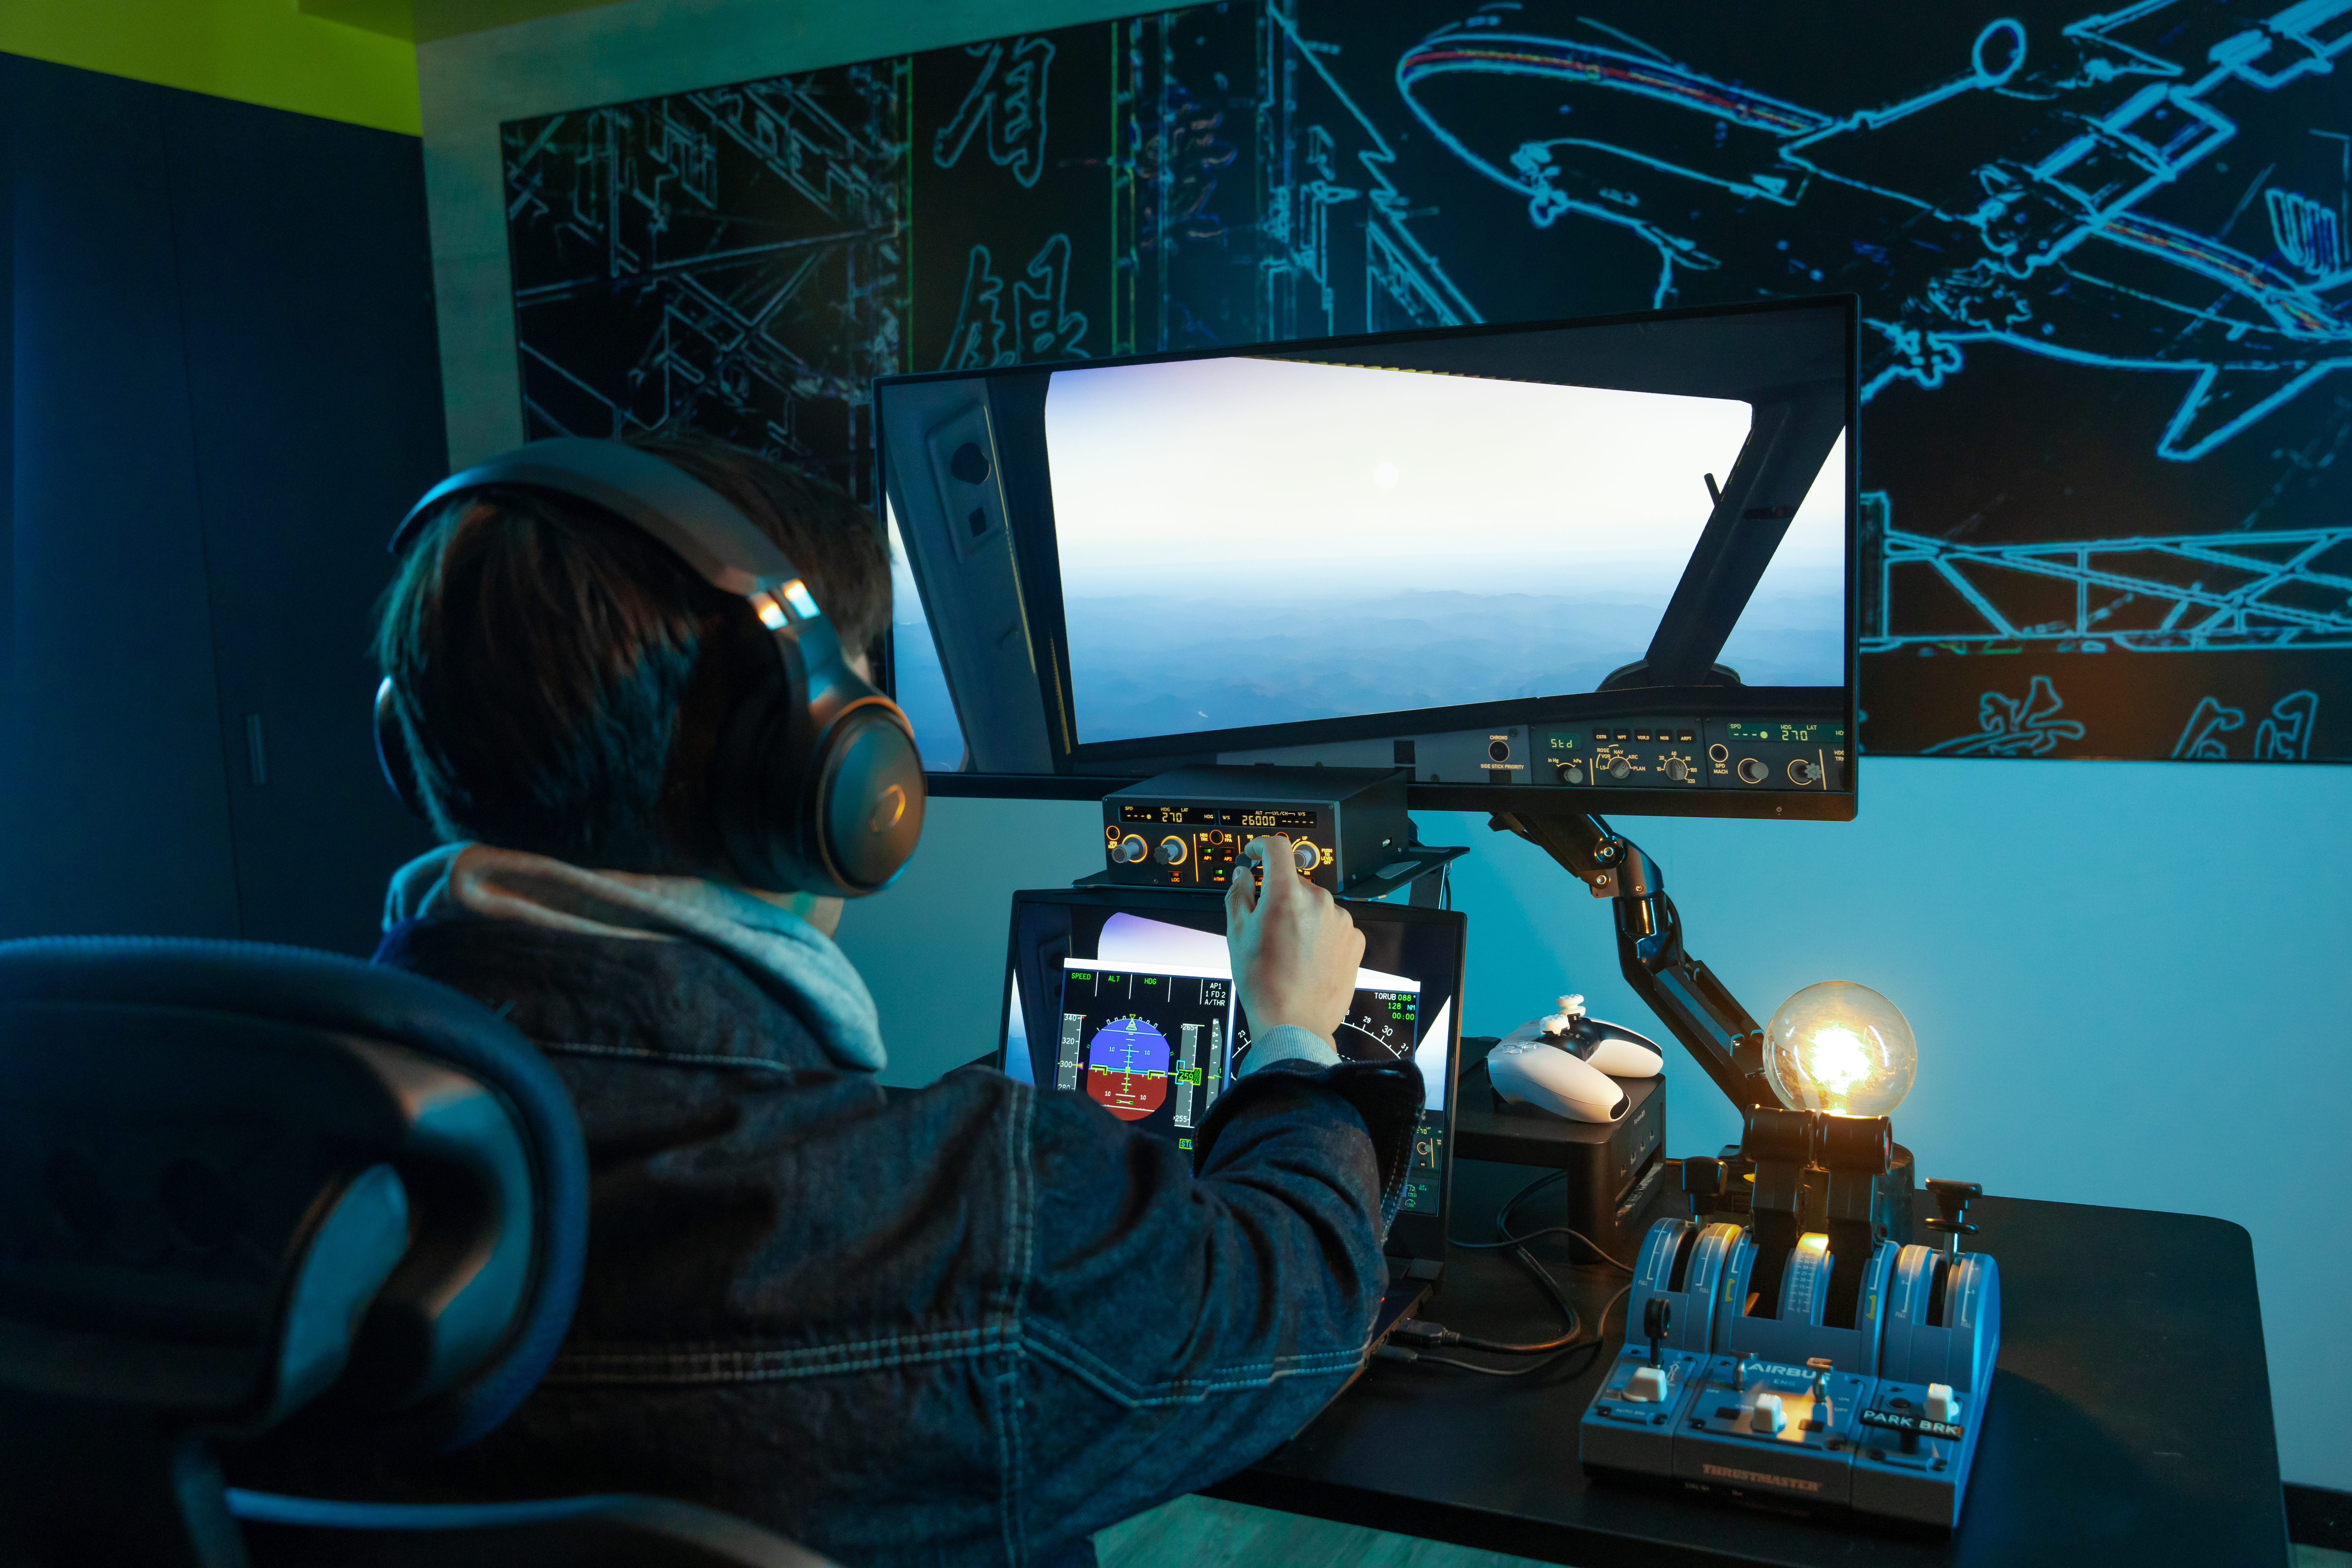 miniFCU shown as part of a wider flight simulator home cockpit setup.